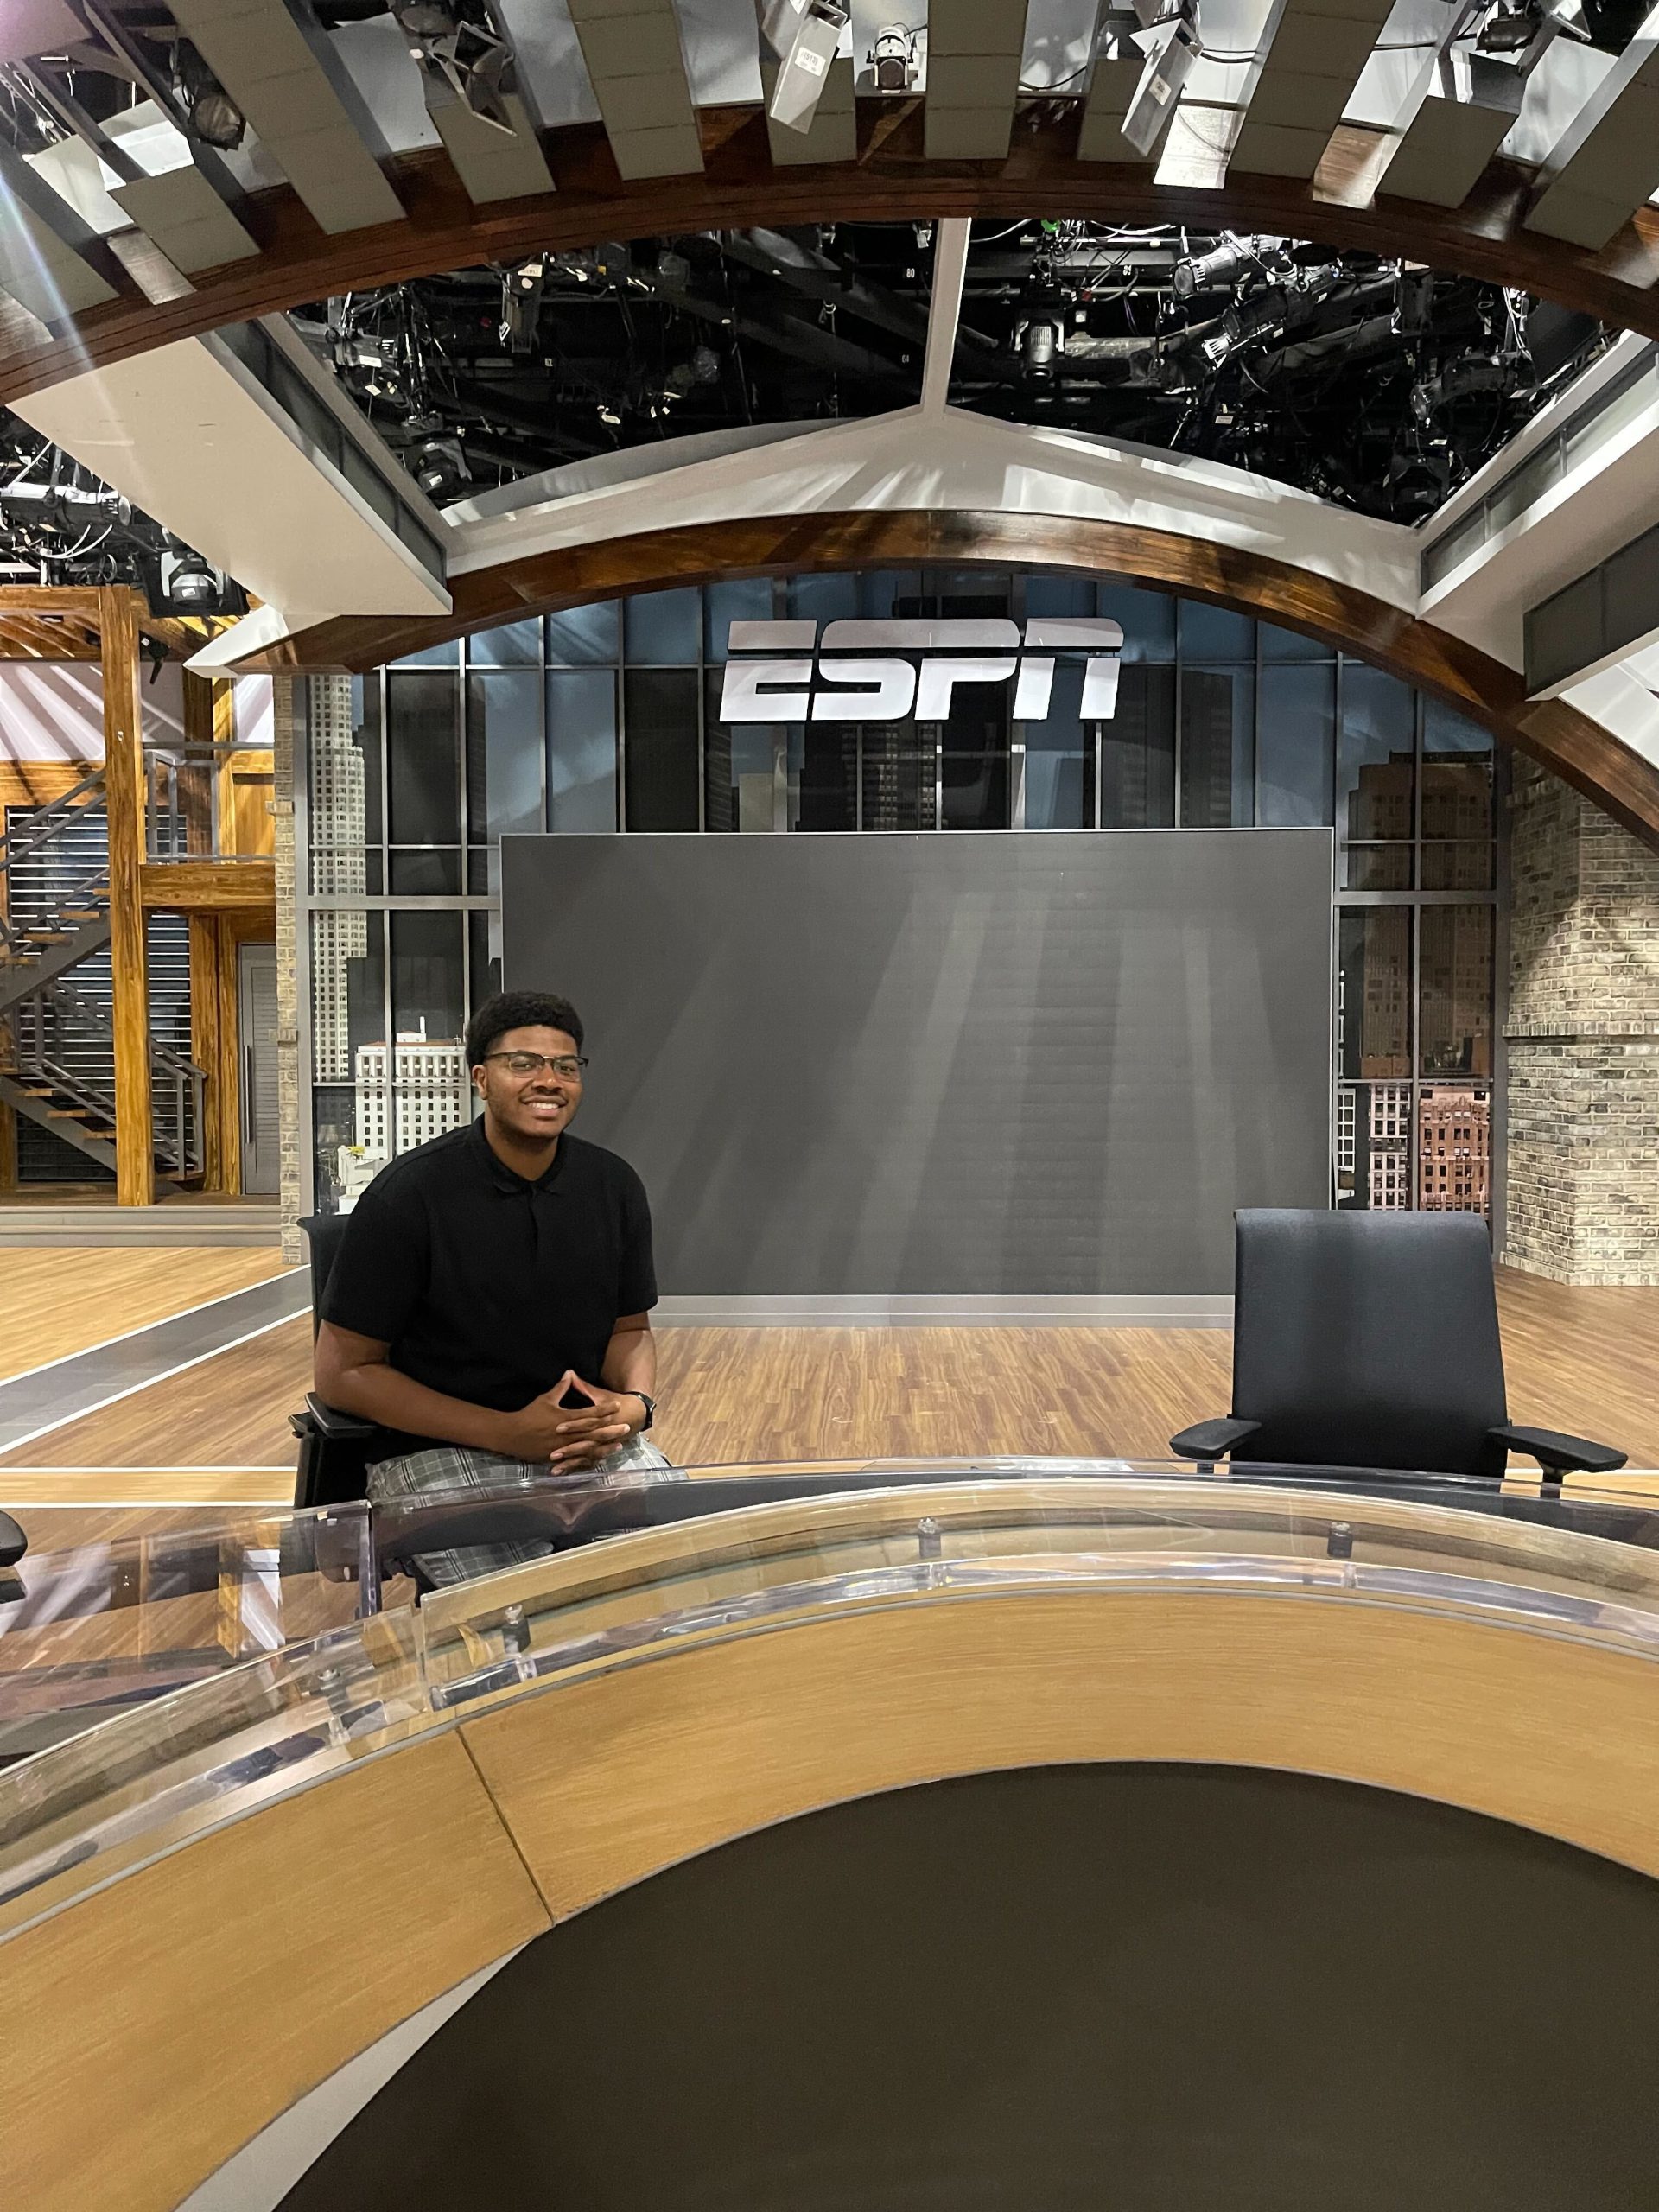 Payton sits at an ESPN anchor desk